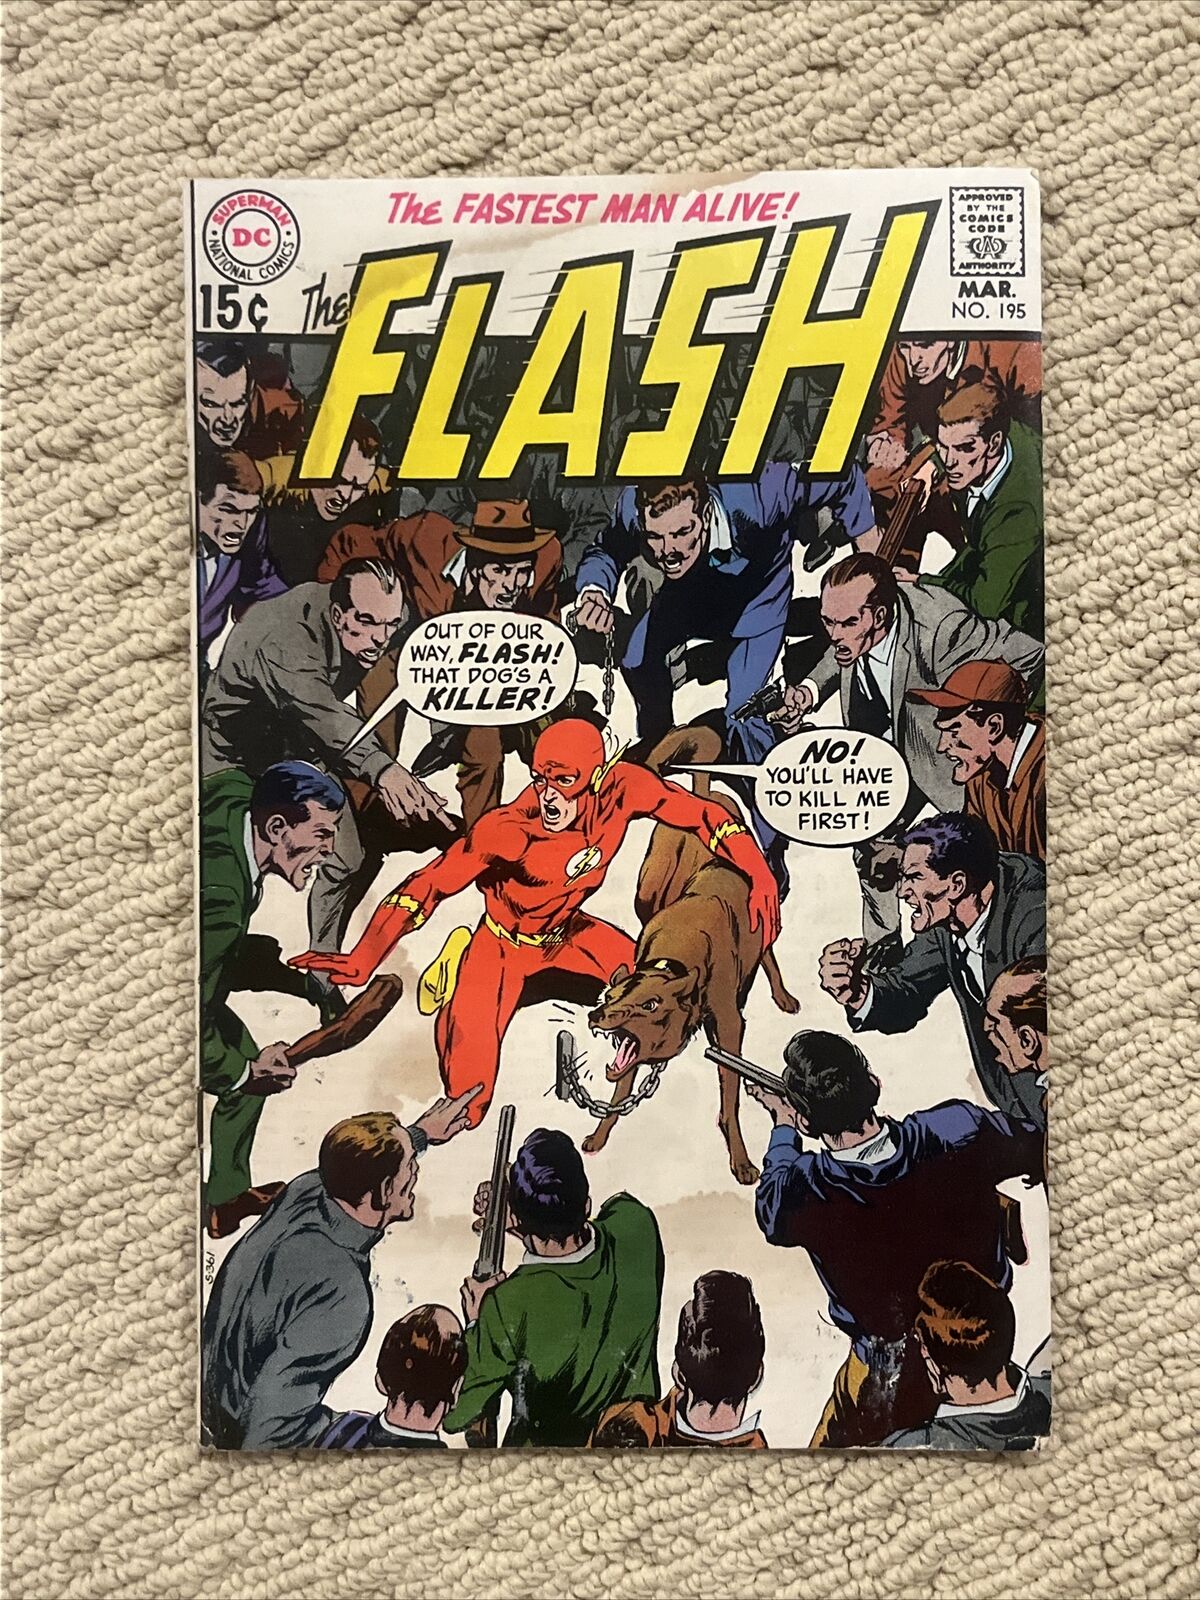 The Flash Comic Book #195 | DC Comics | MAR 1971  | VG (ST)